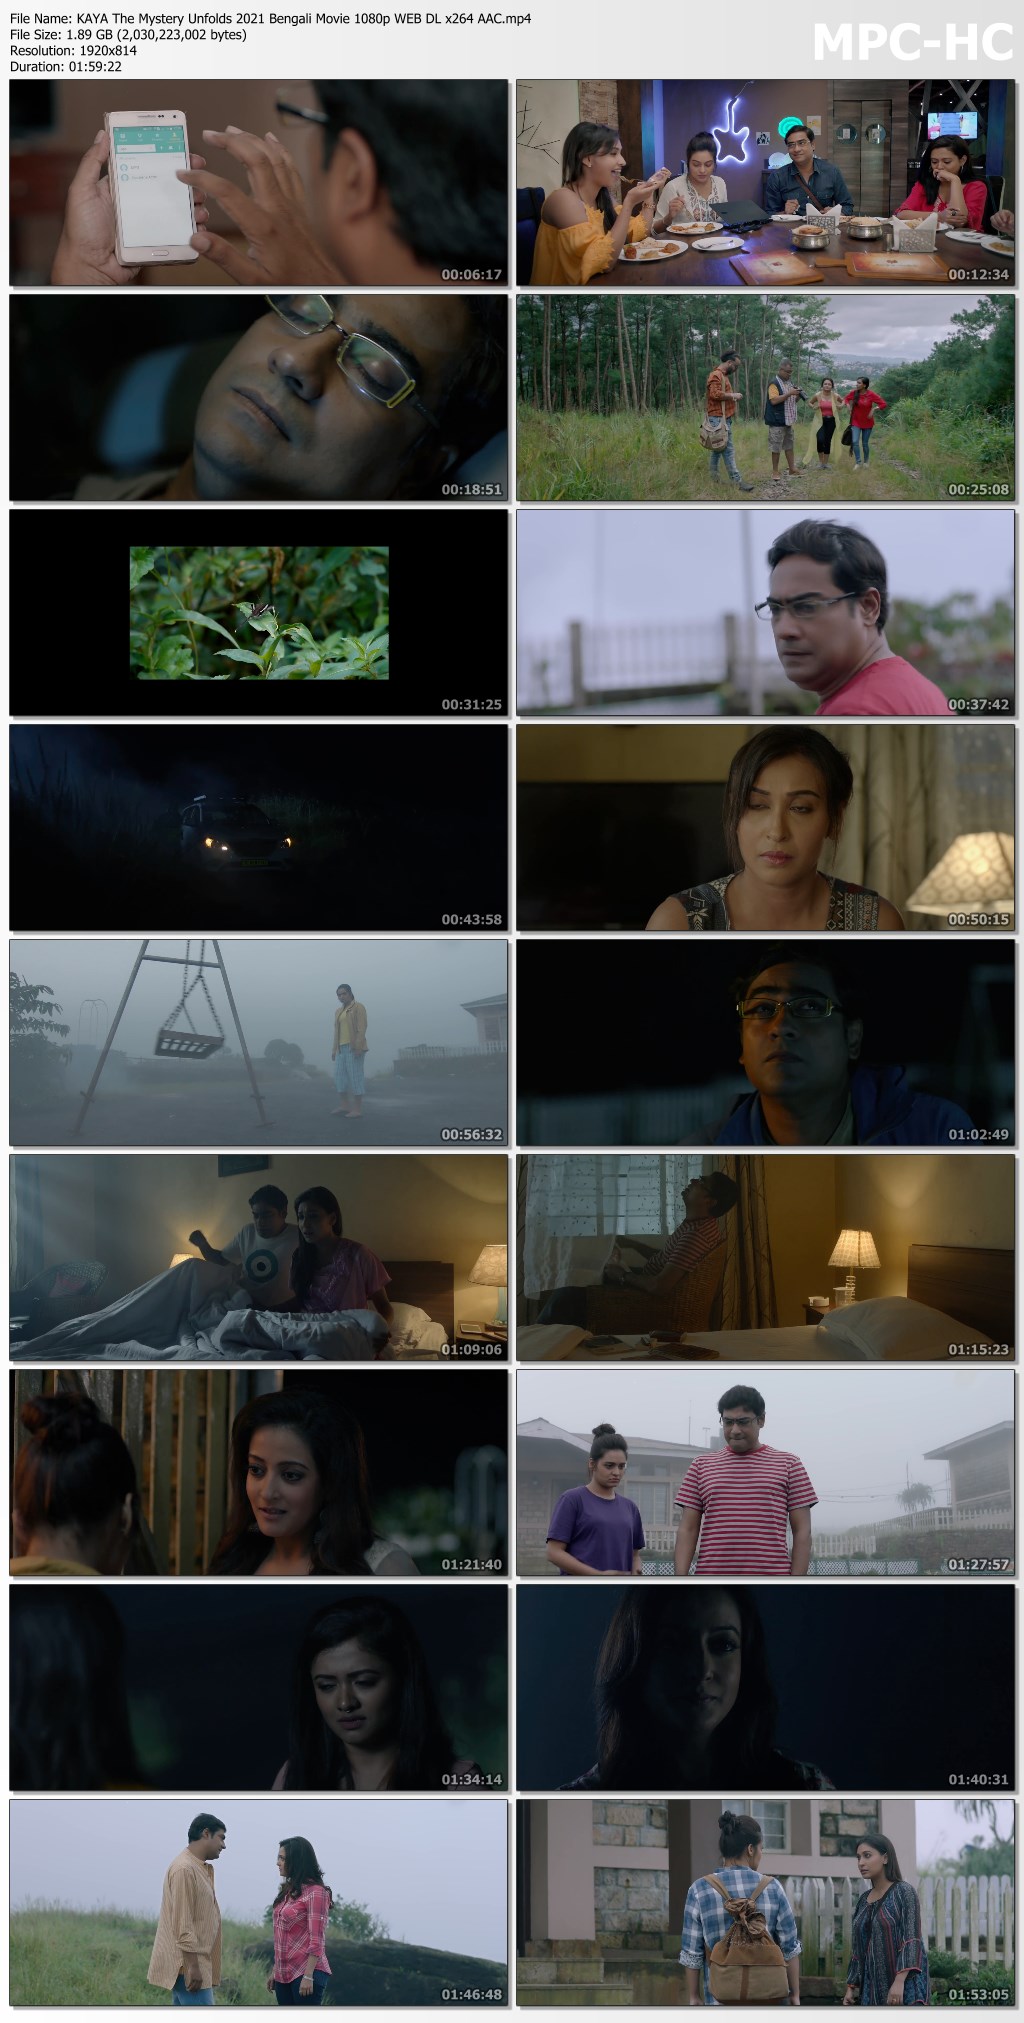 KAYA The Mystery Unfolds 2021 Bengali Movie 1080p WEB DL x264 AAC.mp4 thumbs